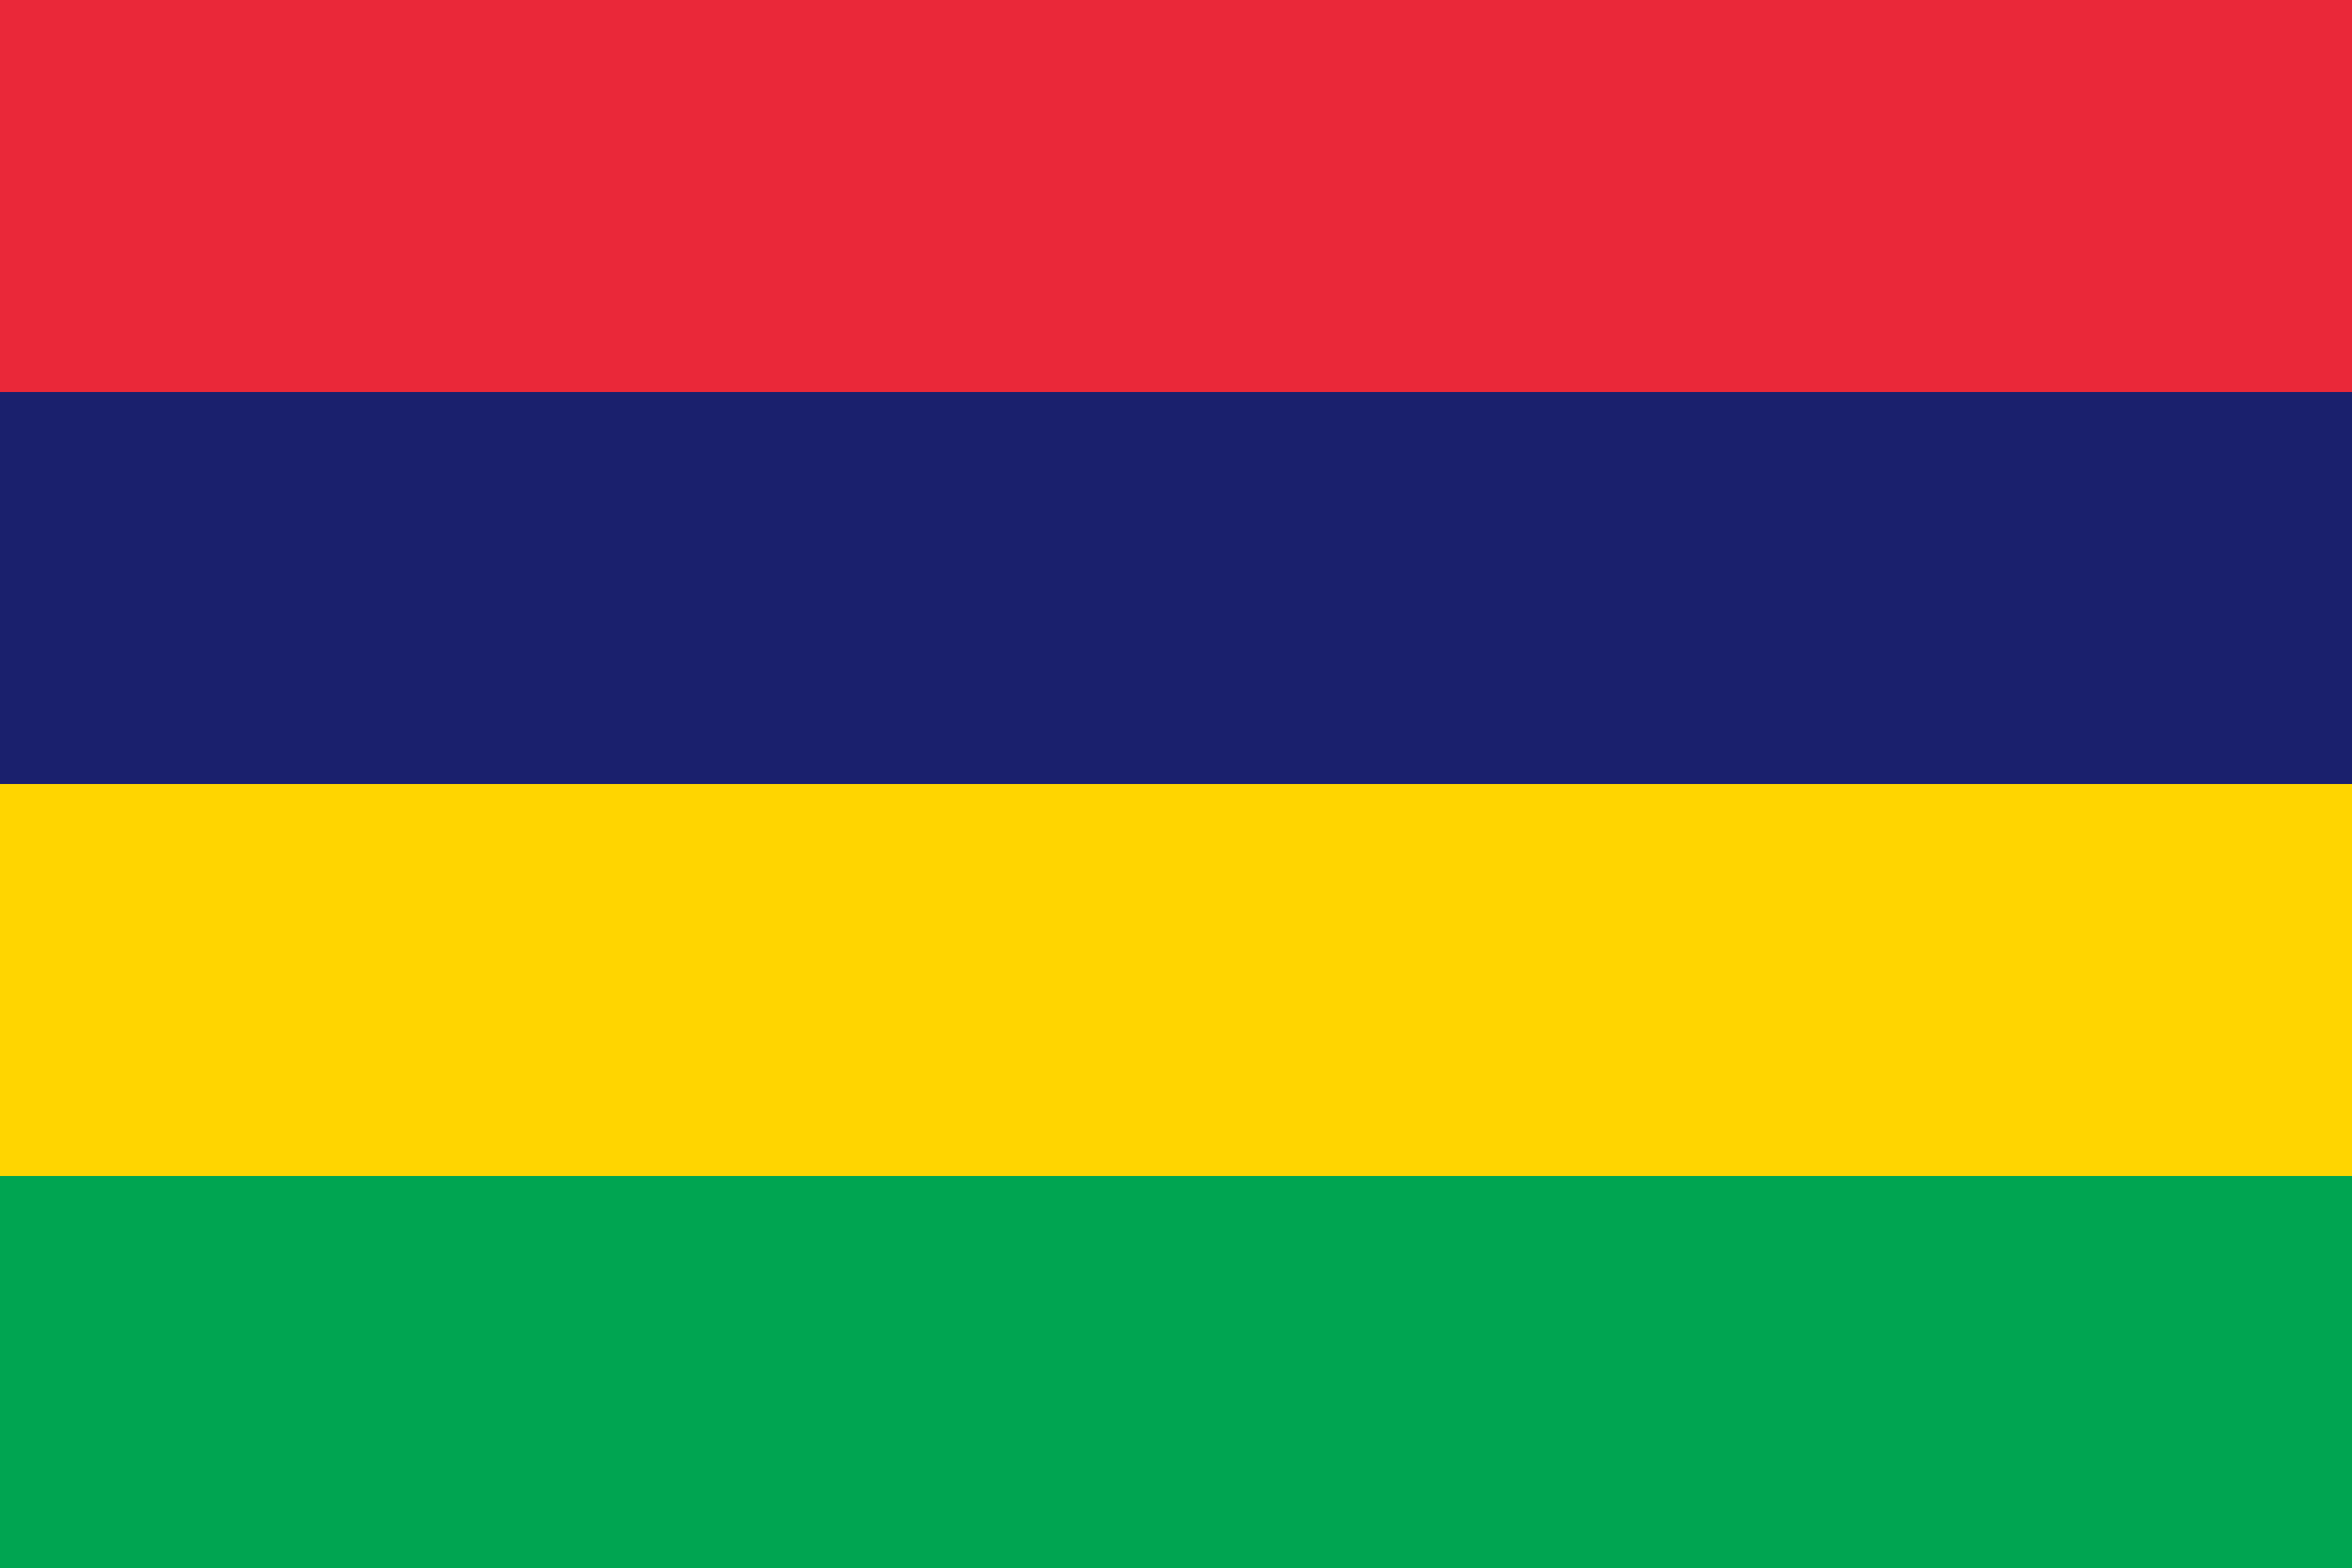 flag Mauritius MayerCie